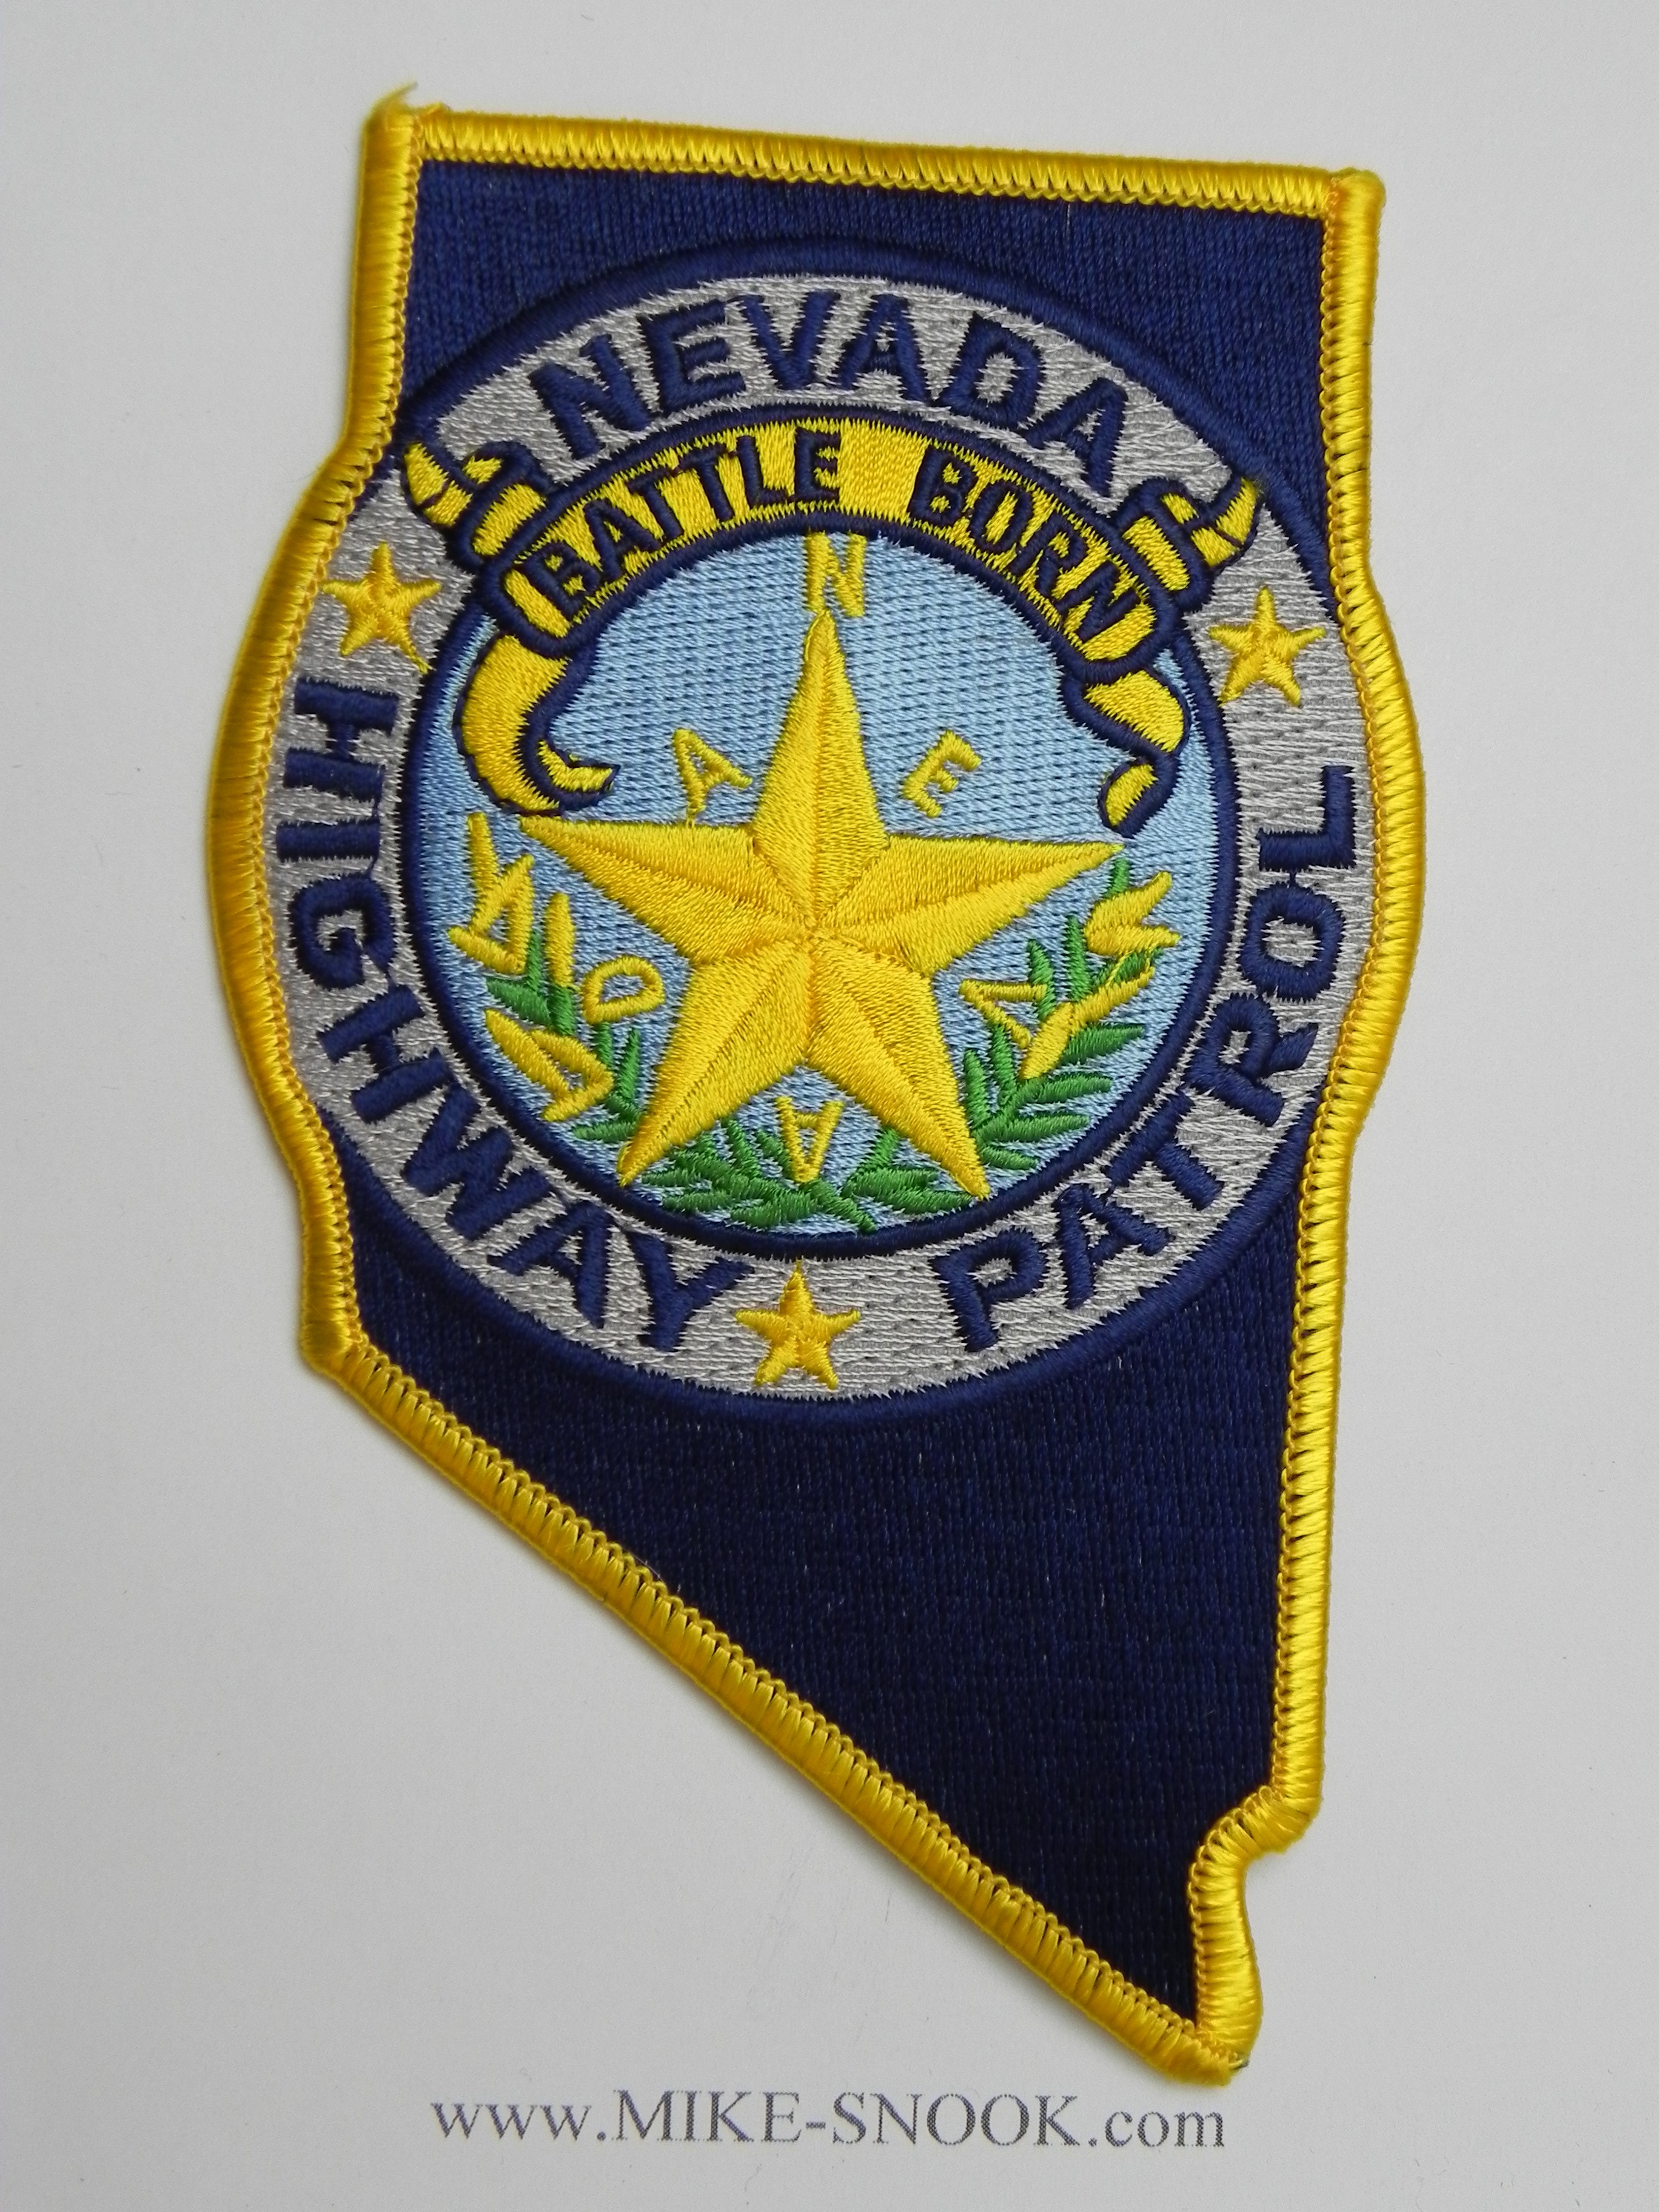 NEVADA HIGHWAY PATROL LAS VEGAS GOLDEN KNIGHTS HENDERSON POLICE PATCH DPS FLEURY 